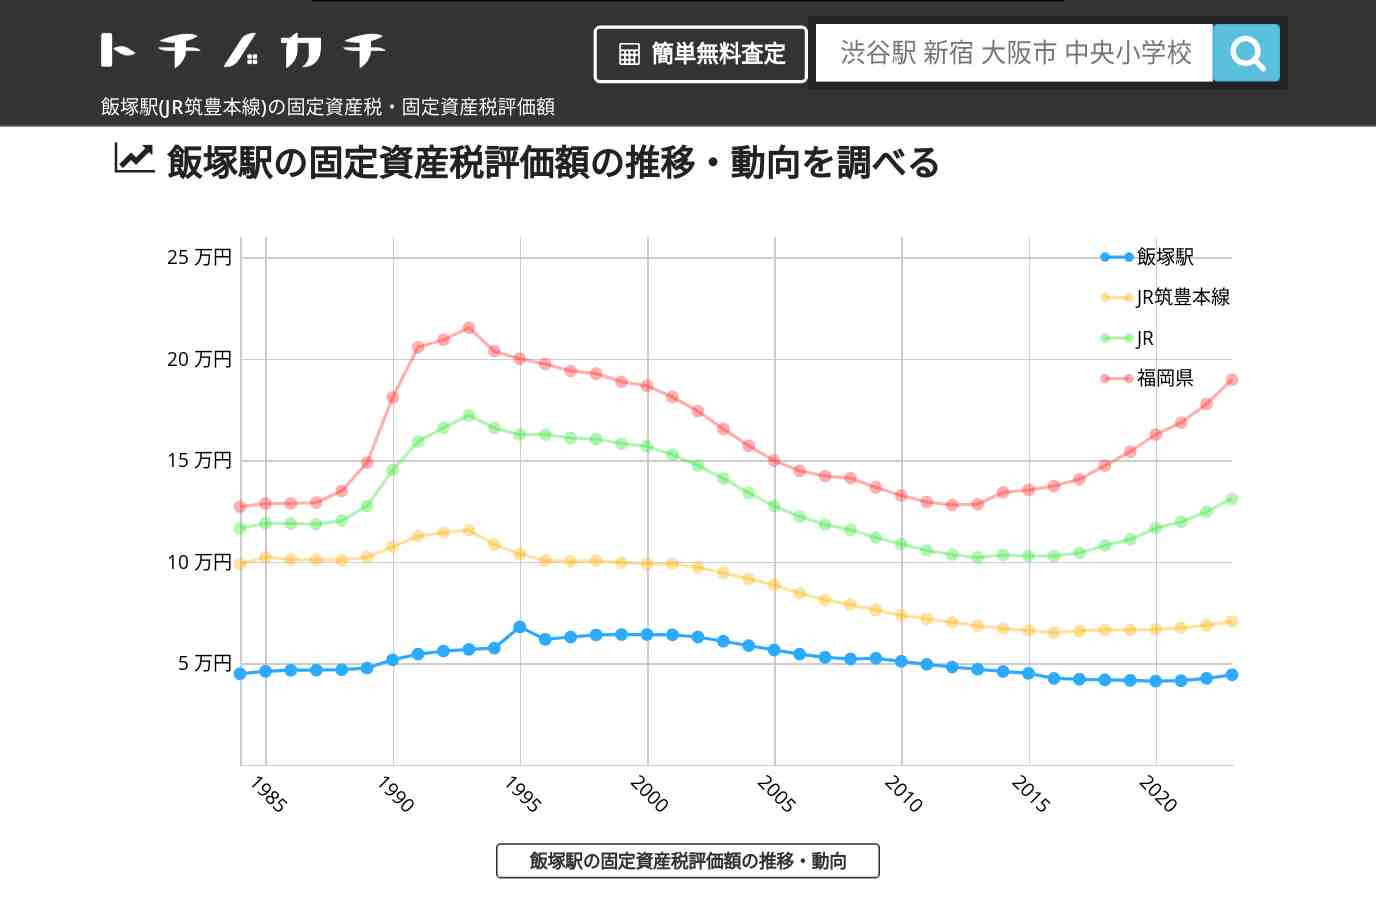 飯塚駅(JR筑豊本線)の固定資産税・固定資産税評価額 | トチノカチ